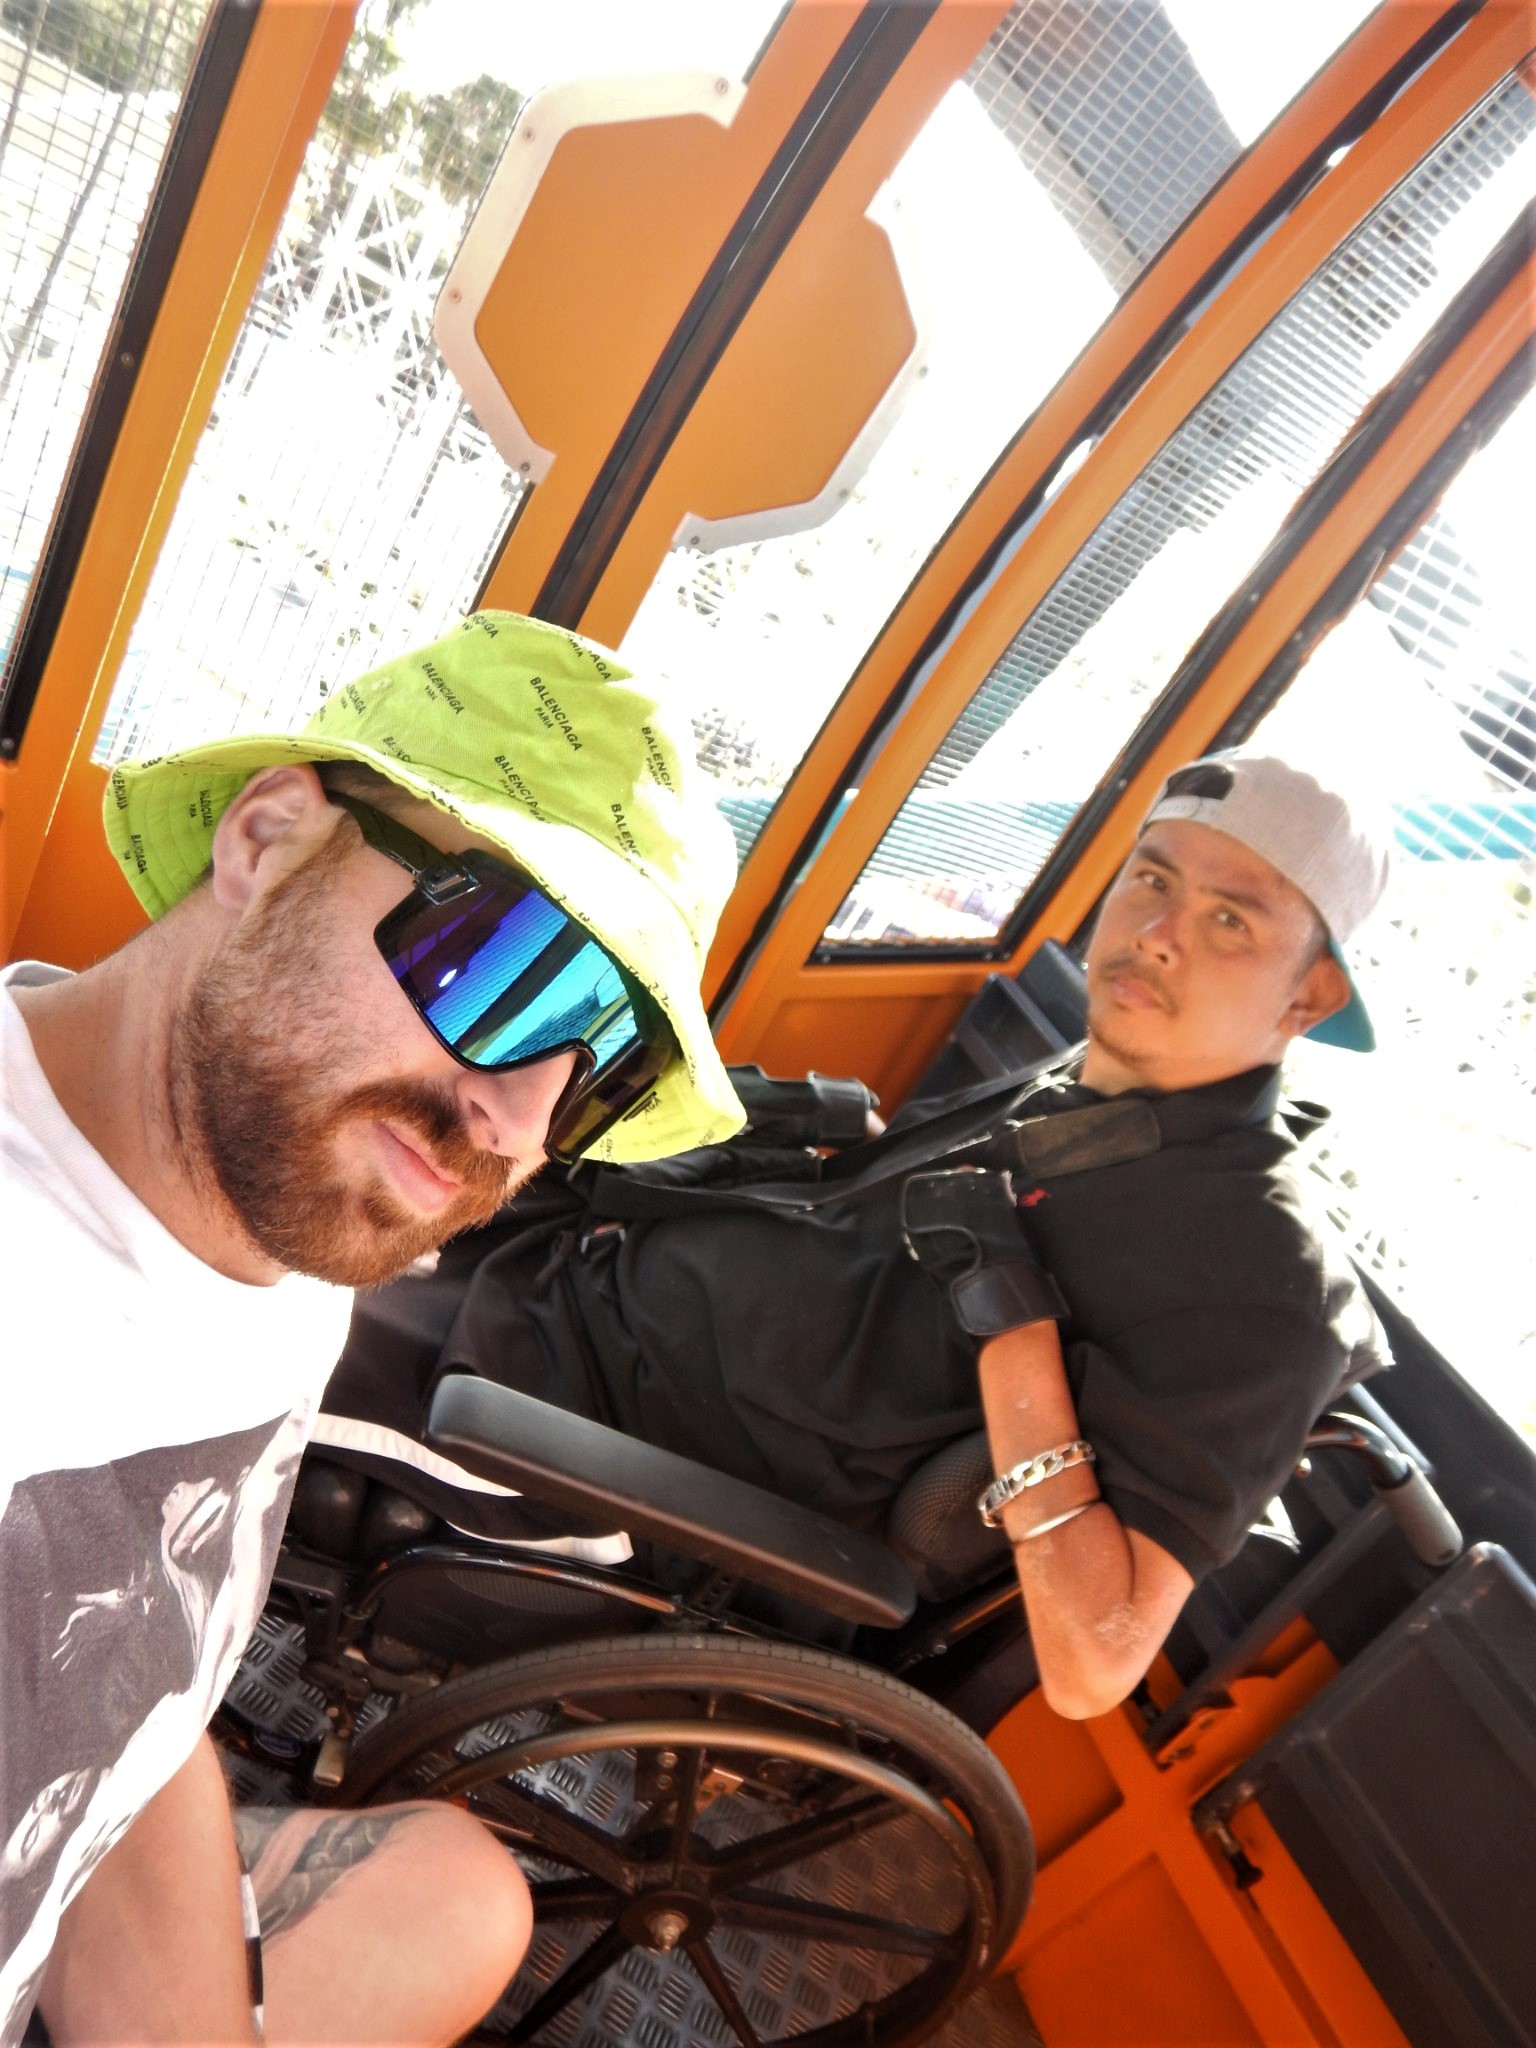 Wheelchair Travel Adventures: Disney California Adventure